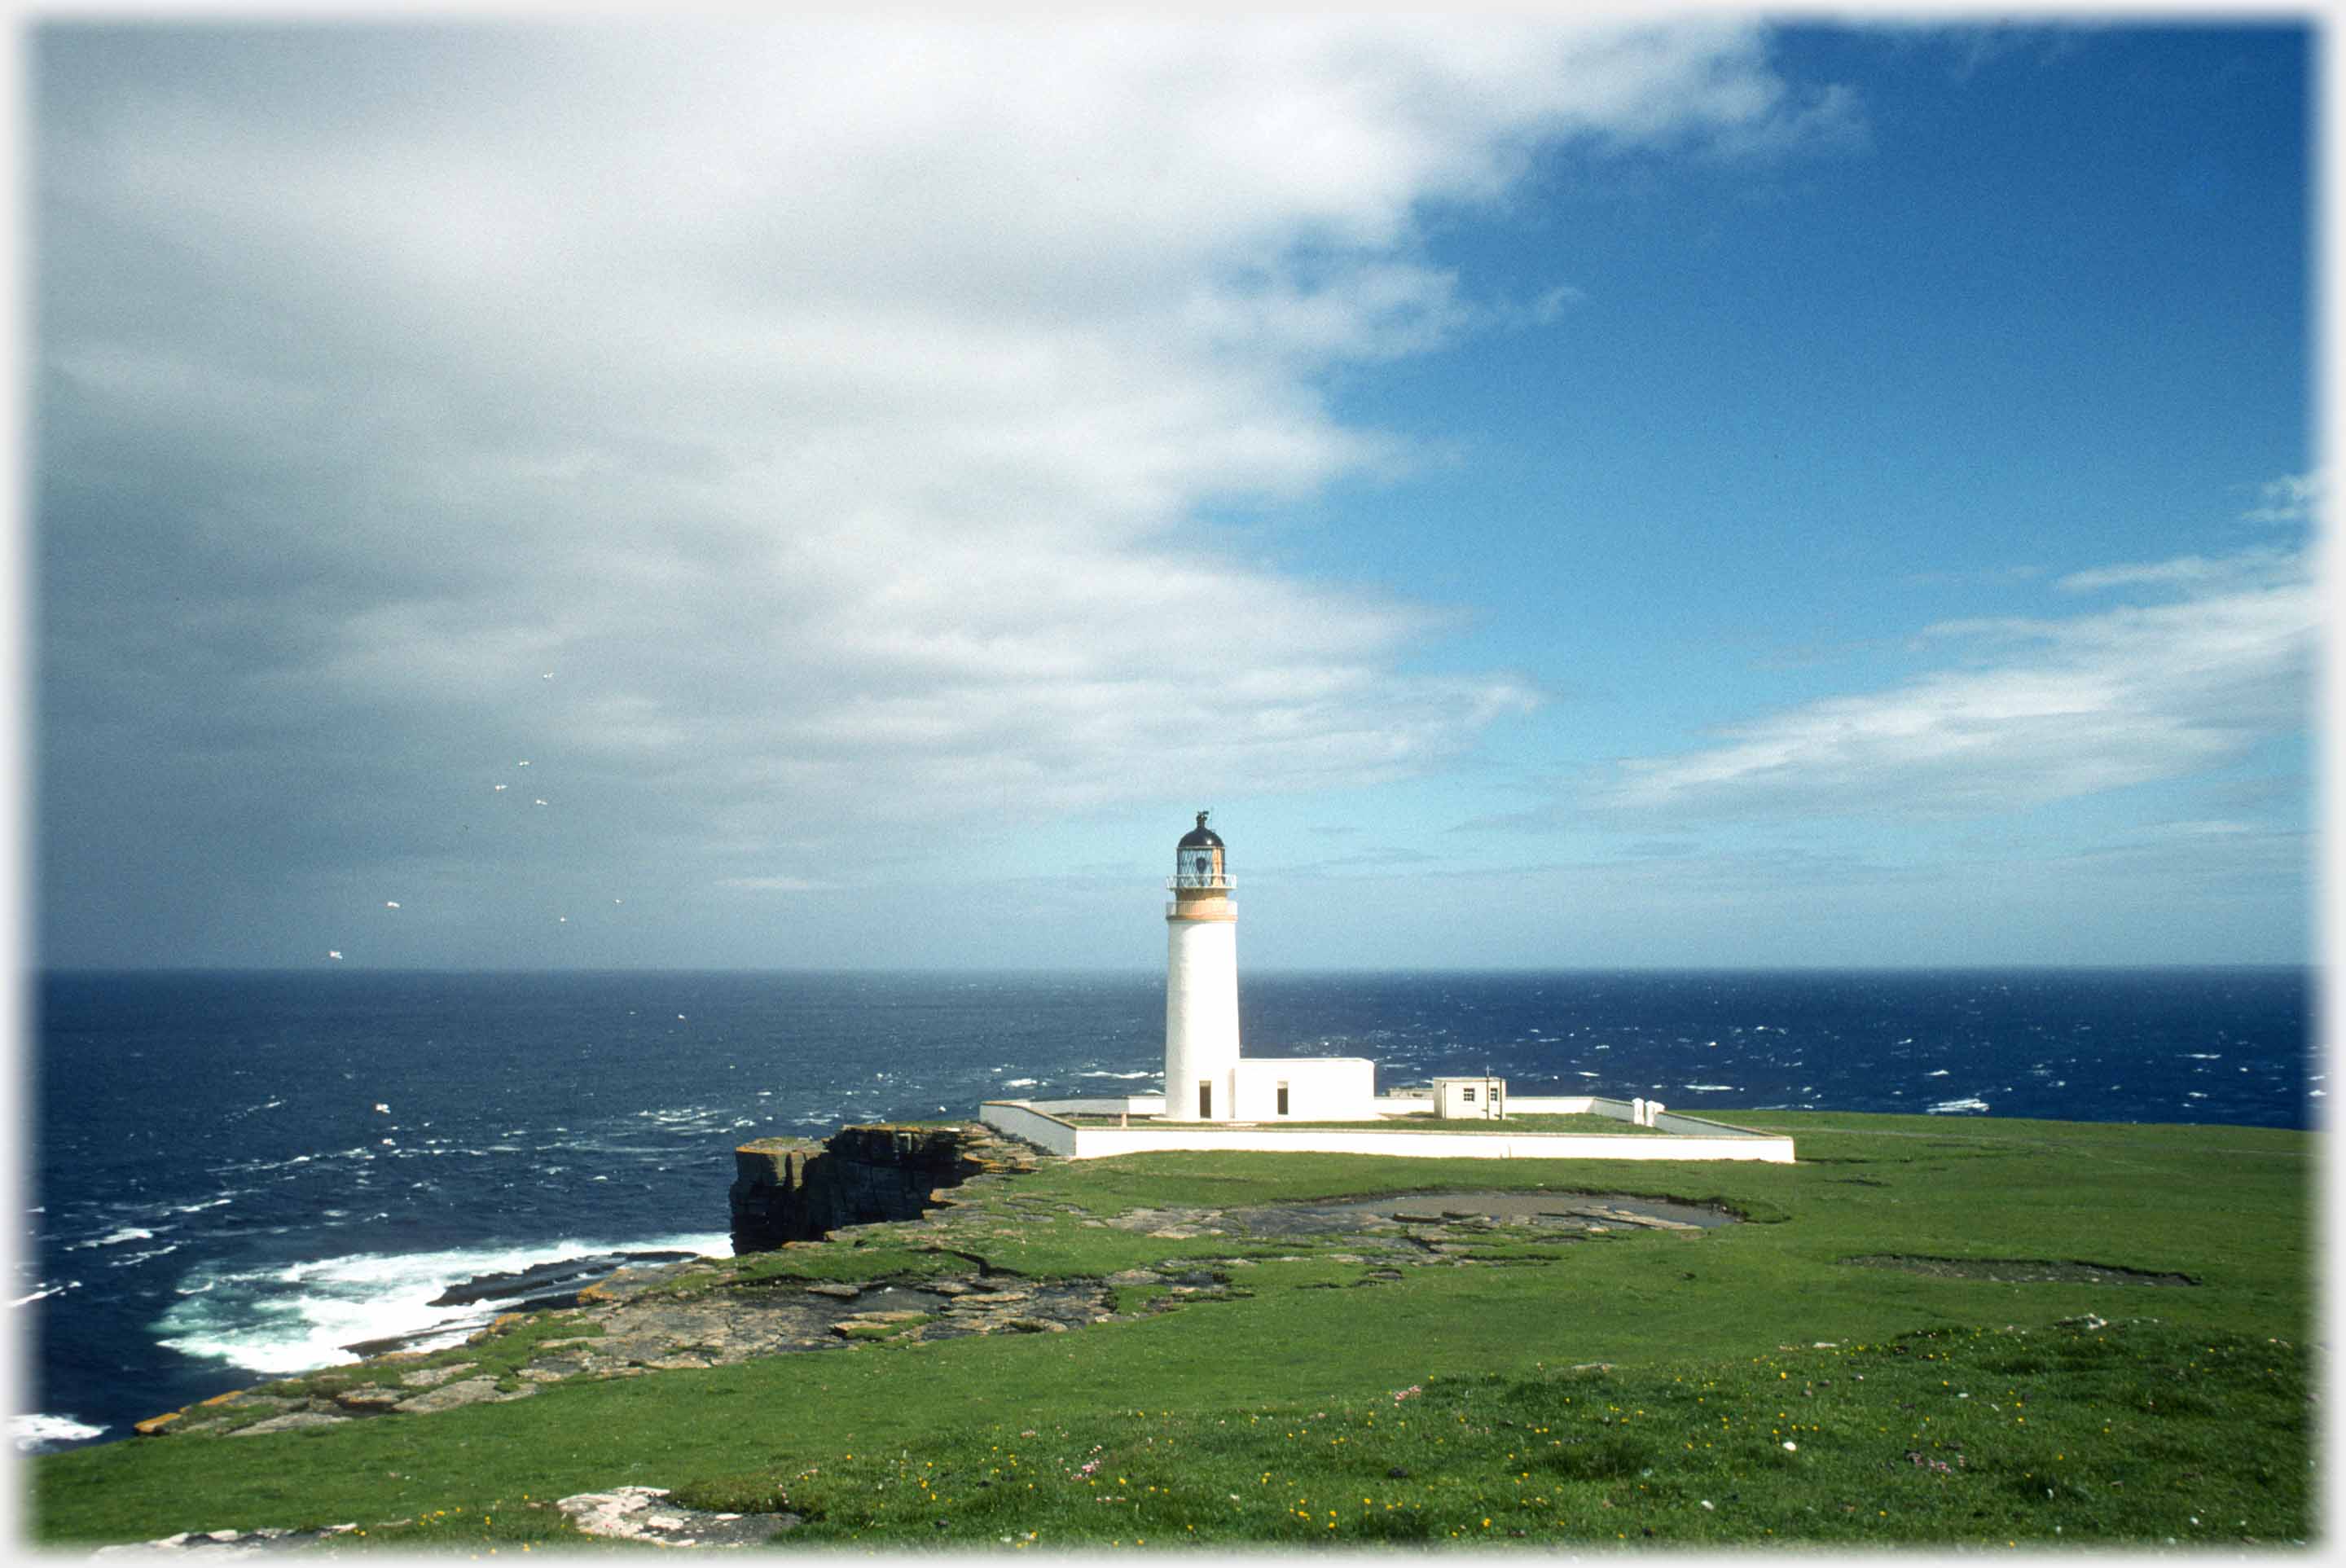 Lighthouse on headland with sea beyond.